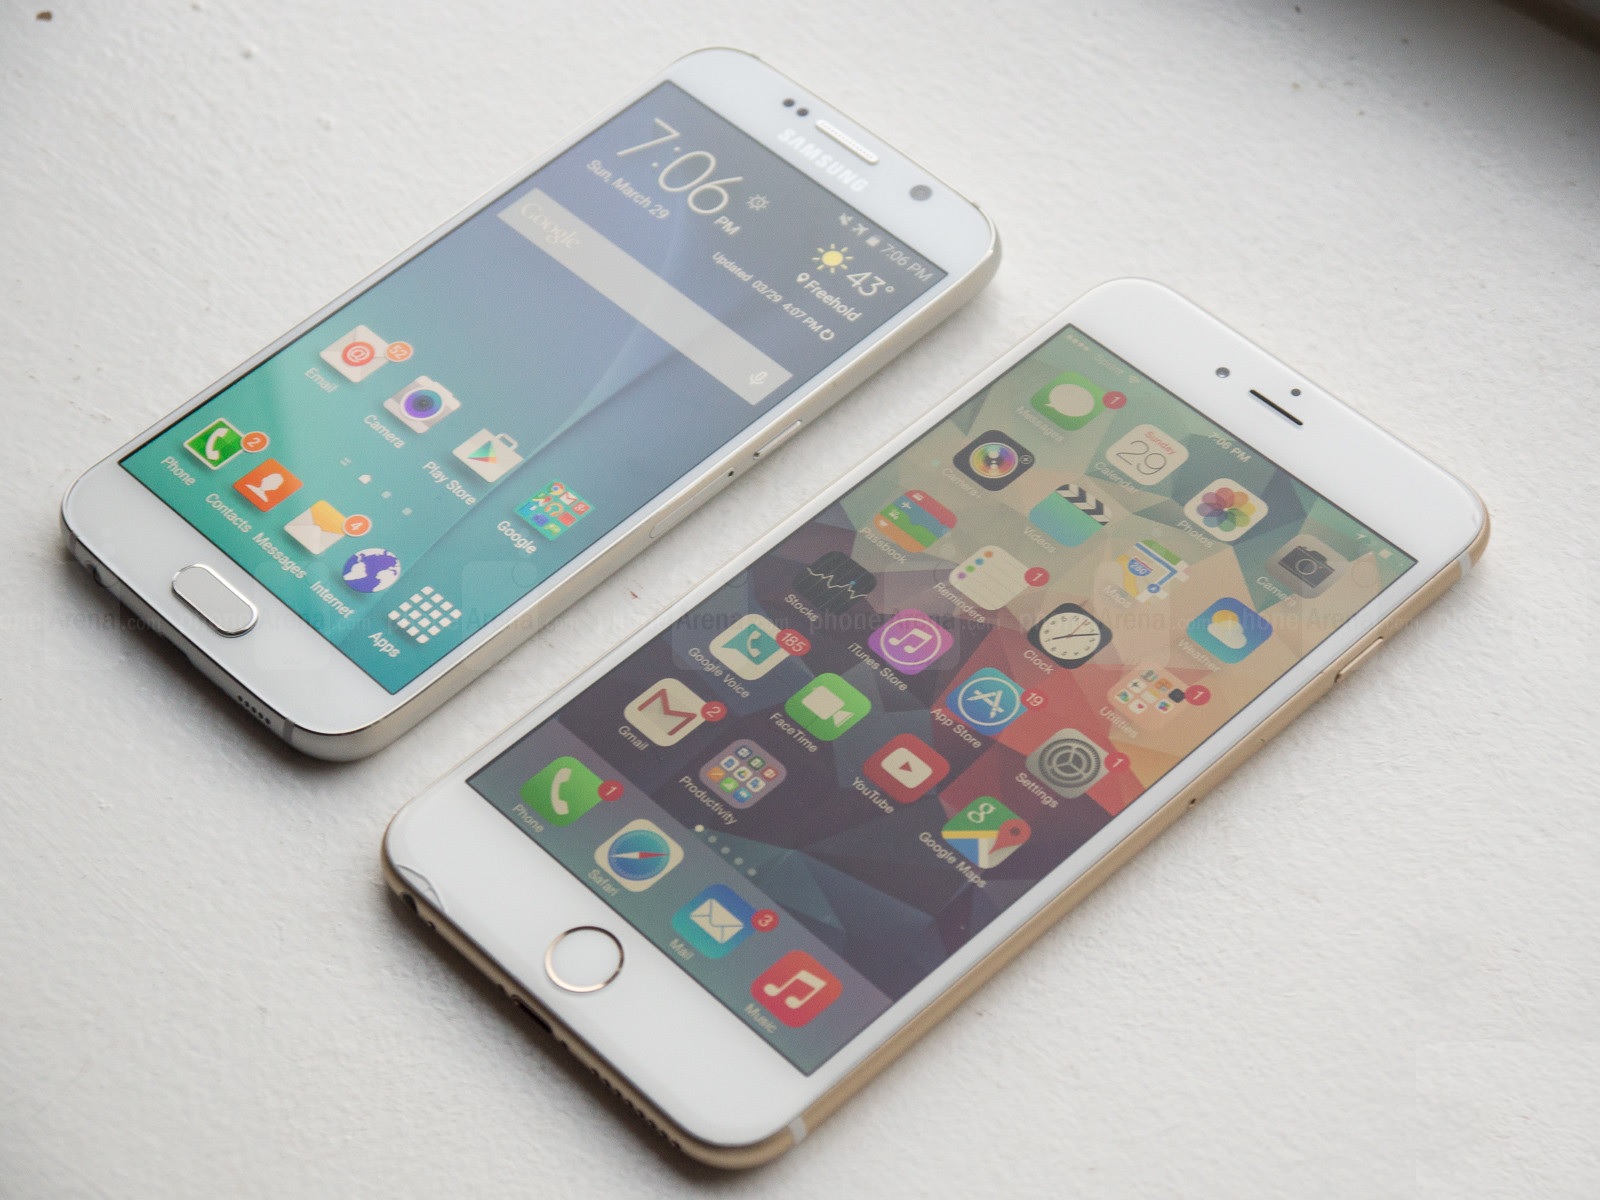 SS Galaxy S6 vs iPhone 6 Plus - 3